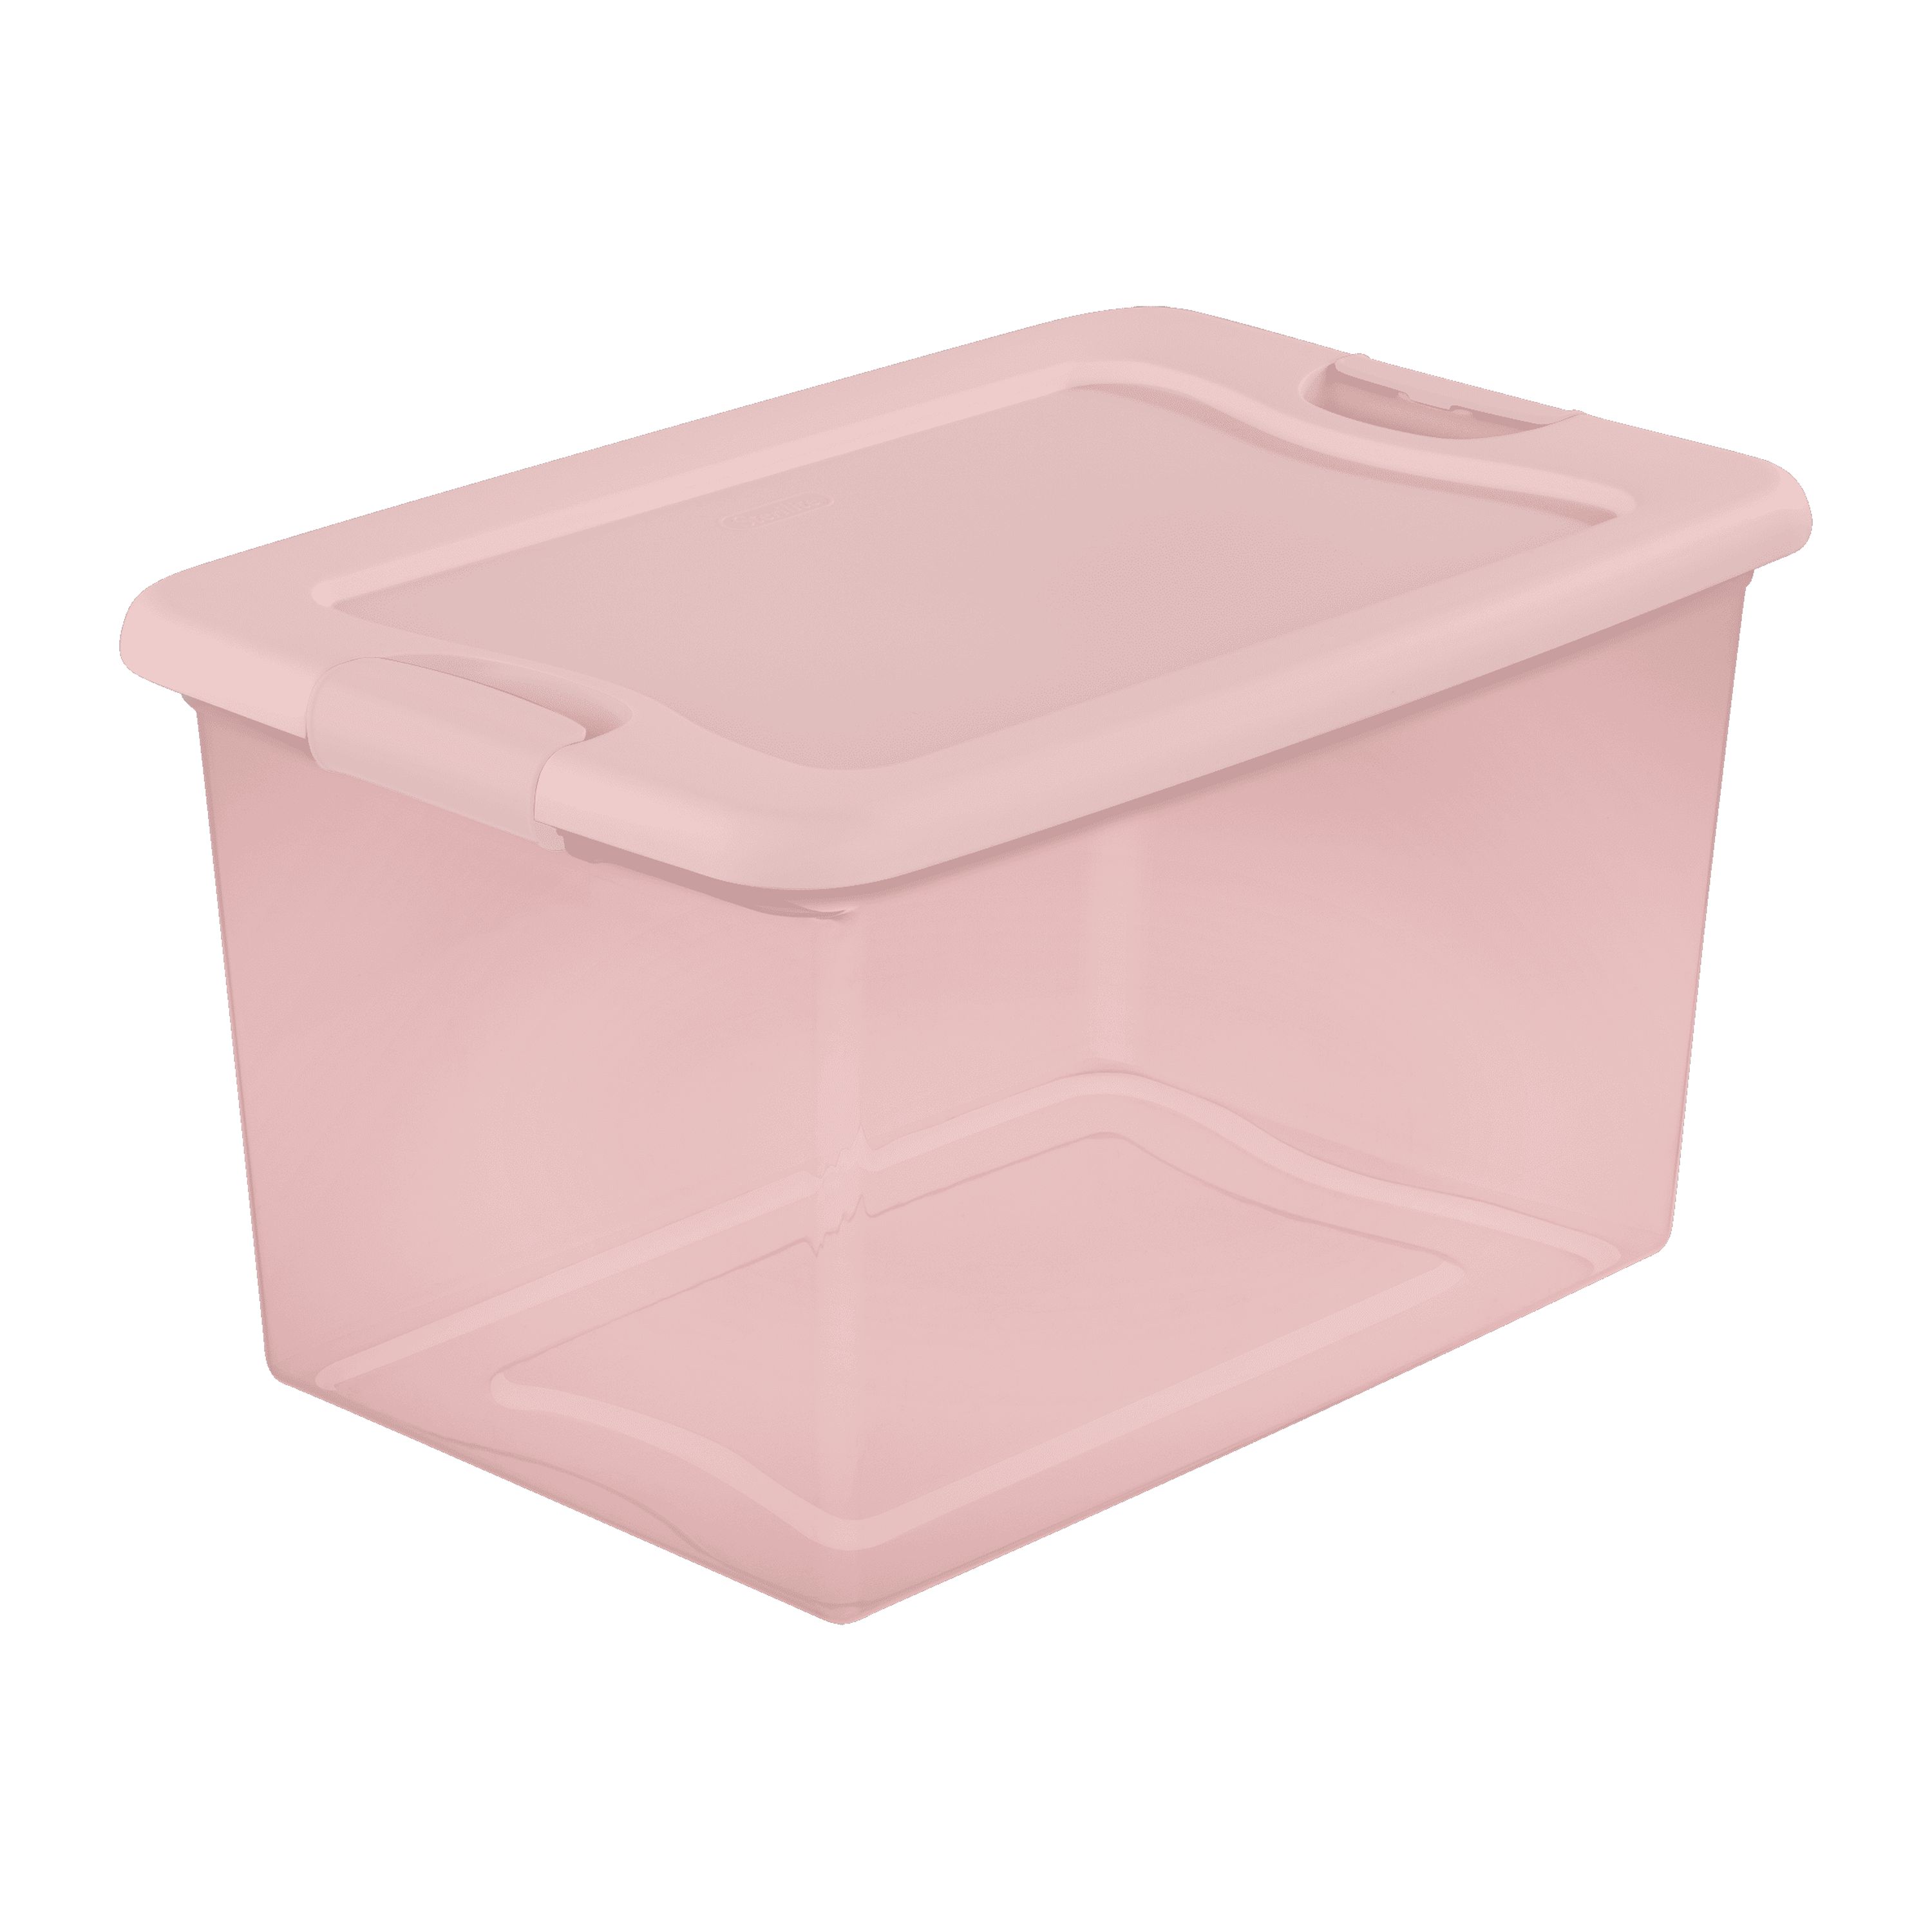 Sterilite 64 Qt. Latching Box Plastic, Blush Pink Tint, Set of 6 - image 3 of 5